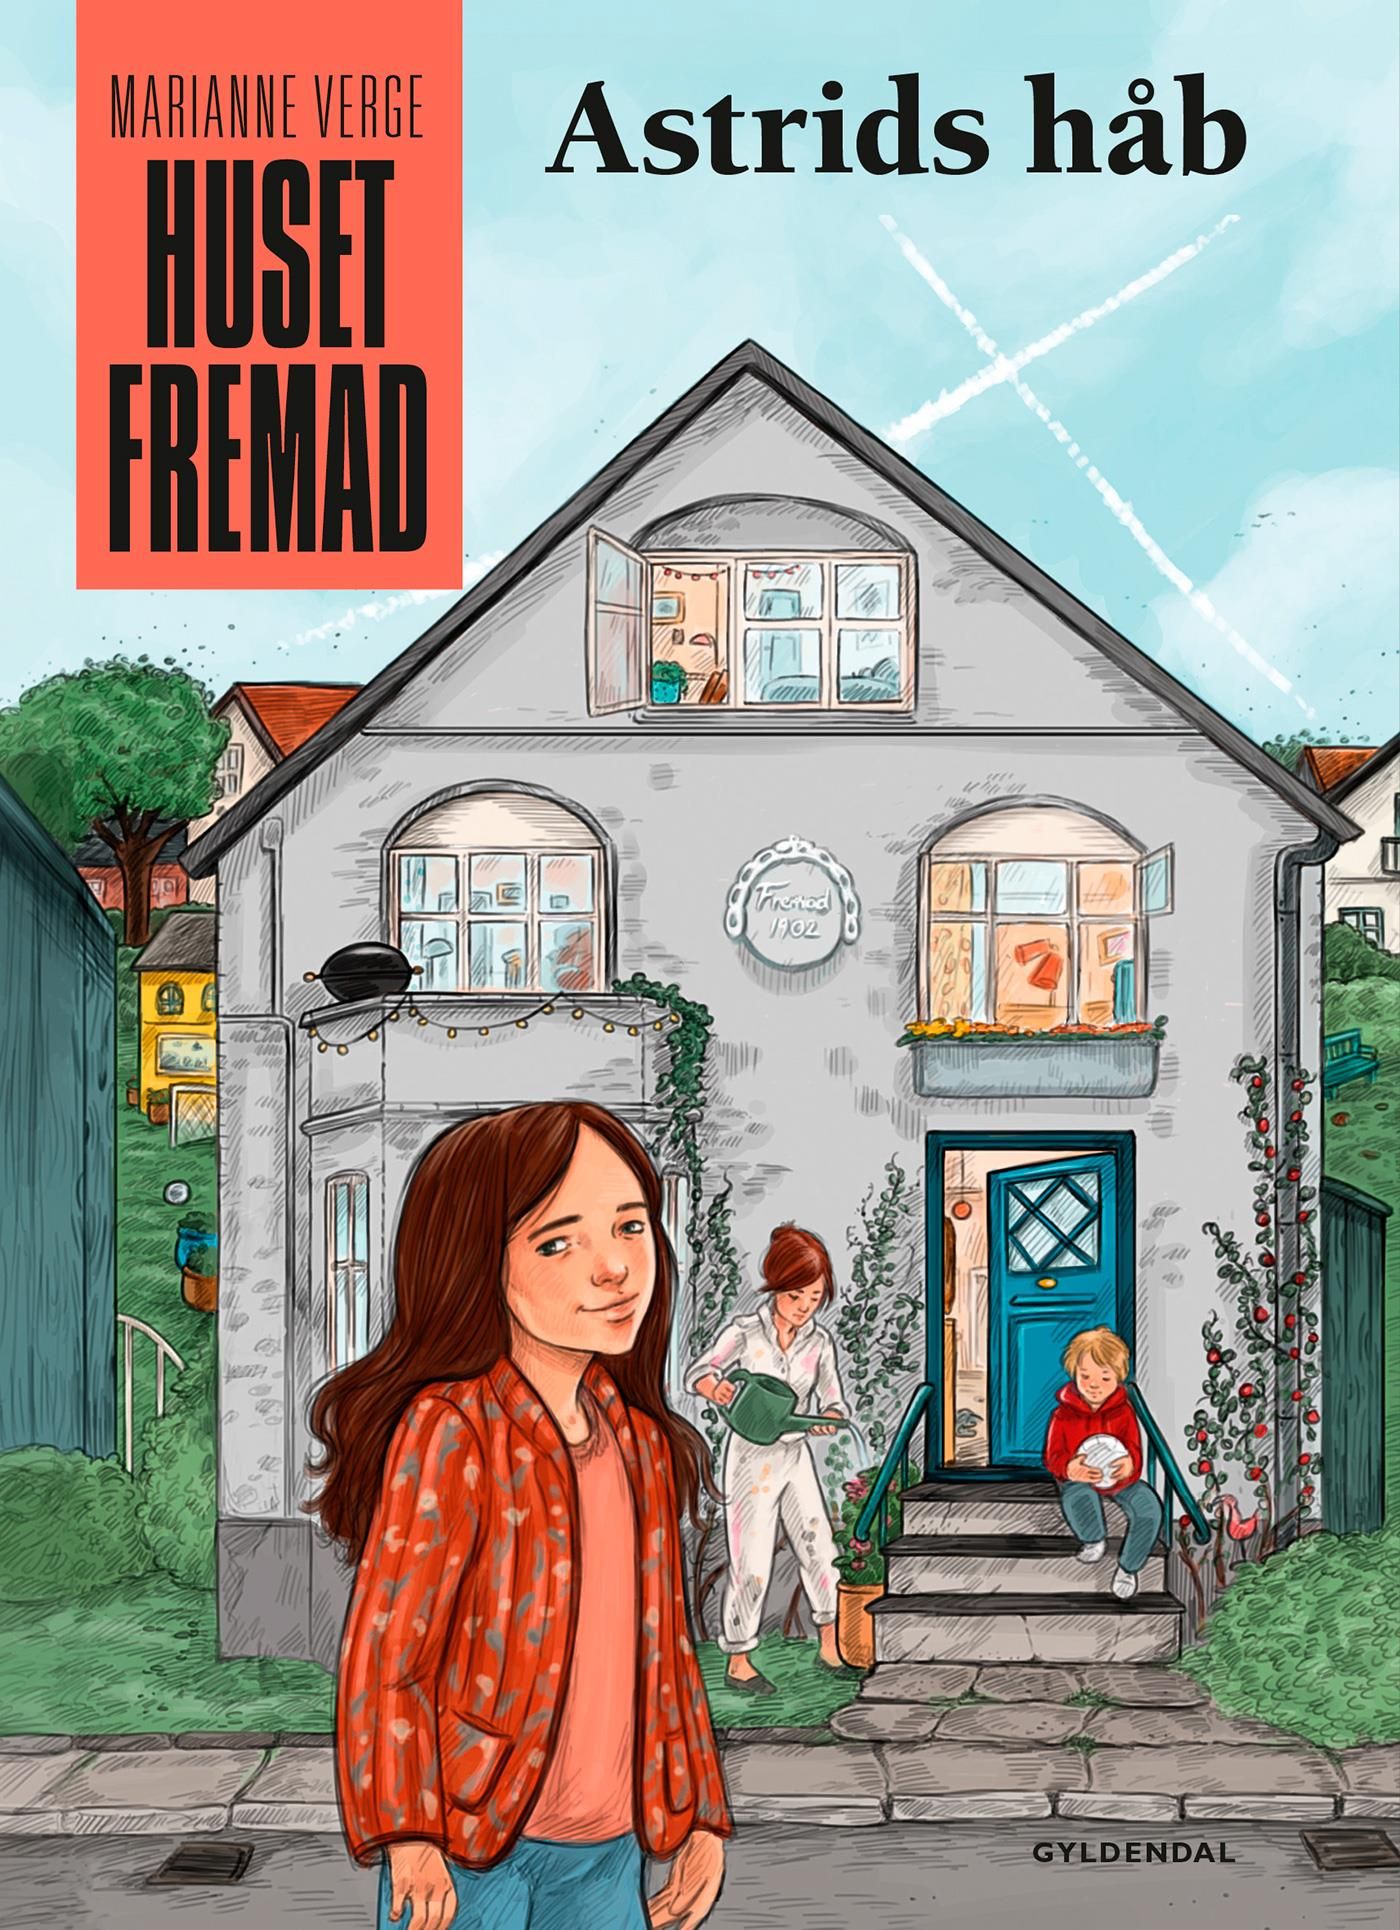 Huset Fremad - Astrids håb, eBook by Marianne Verge